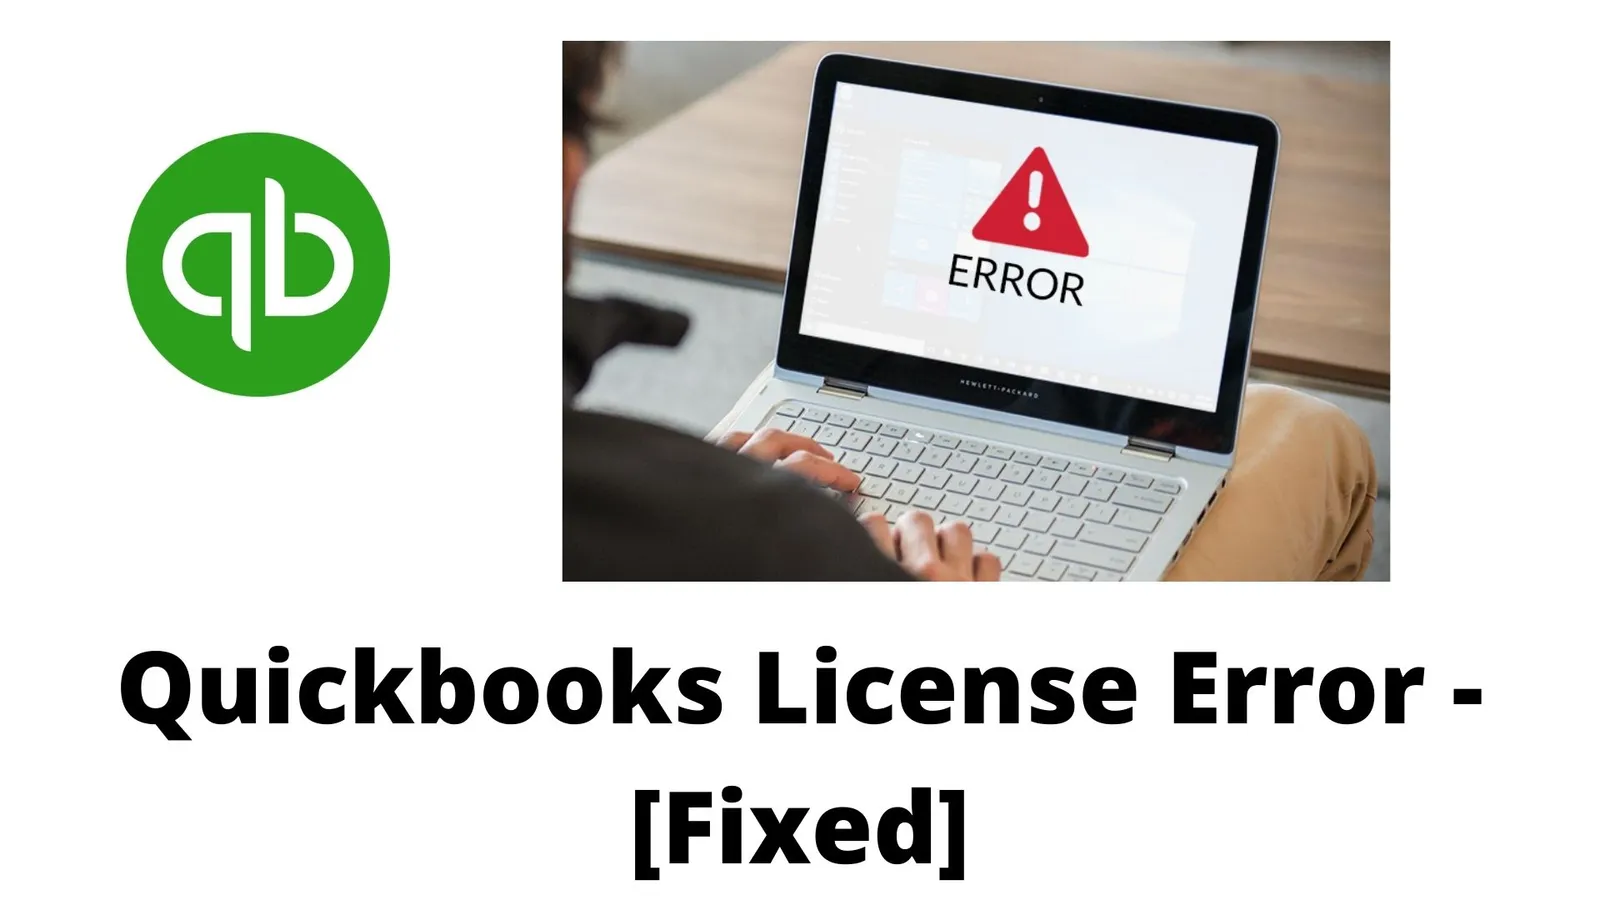 How To Fix Quickbooks License Error?